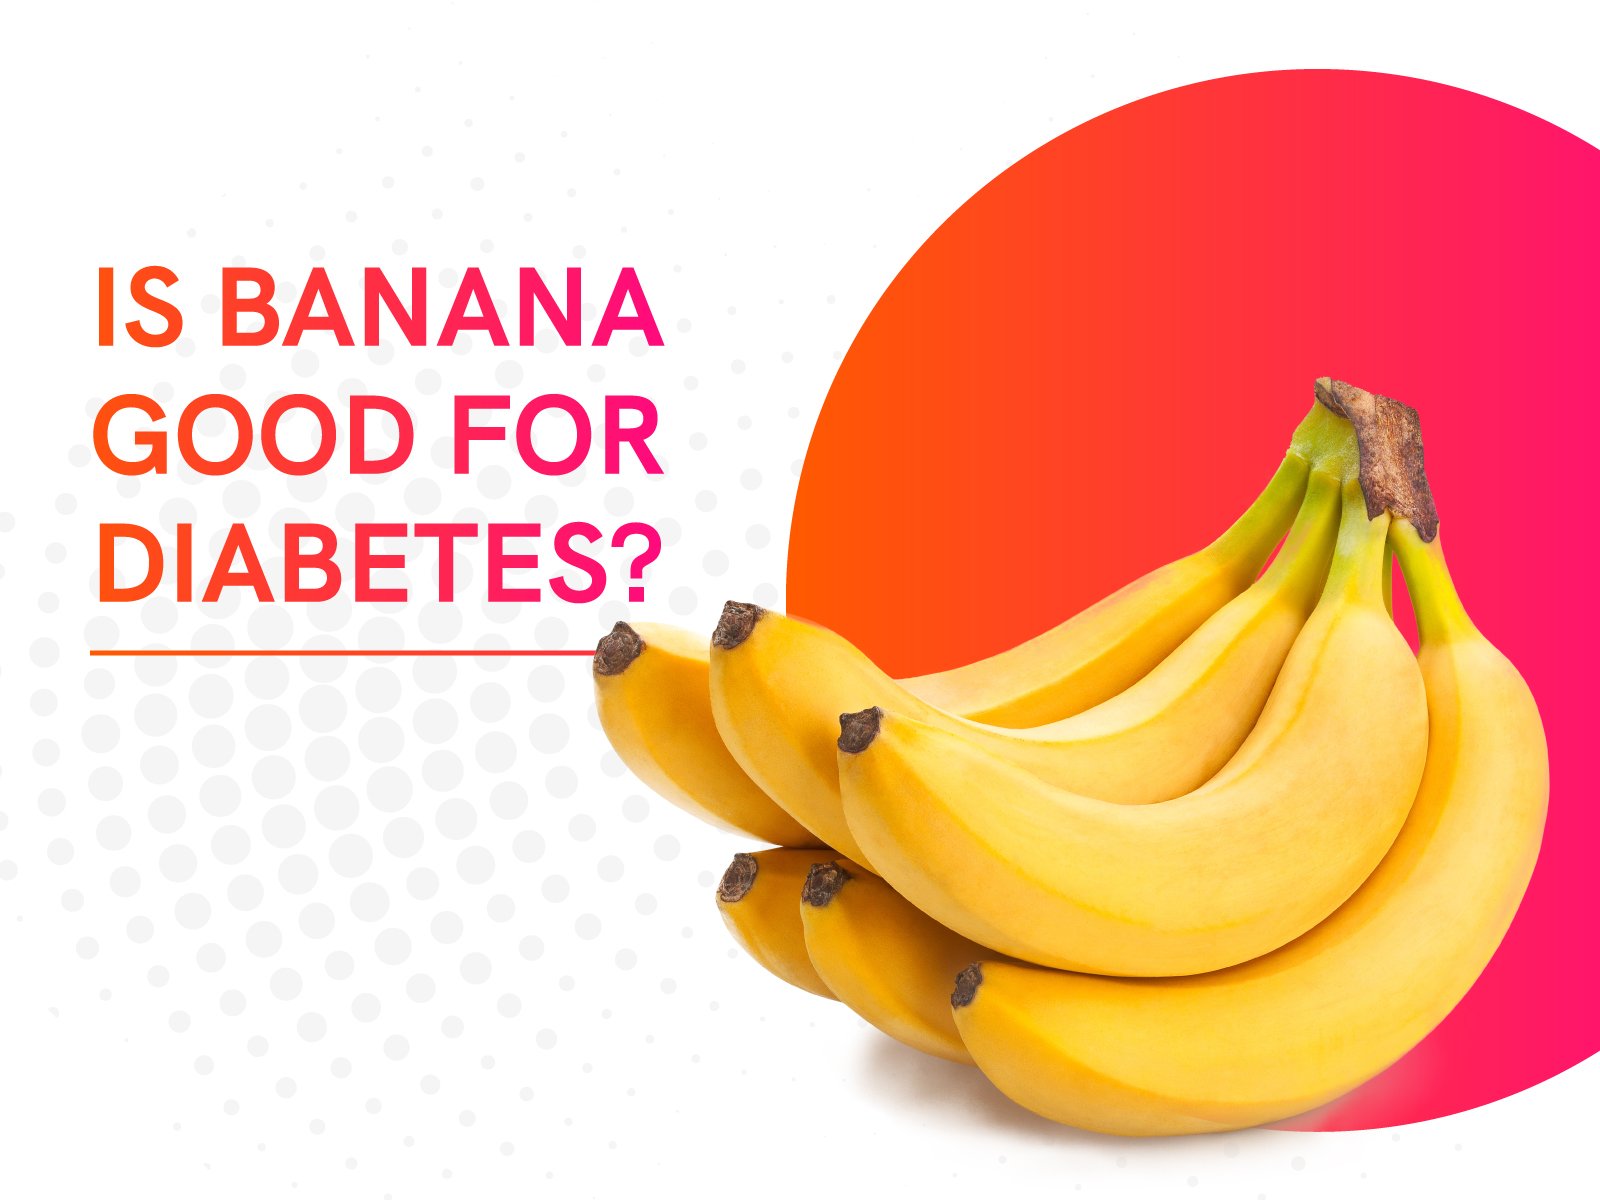 Is banana good for diabetes?